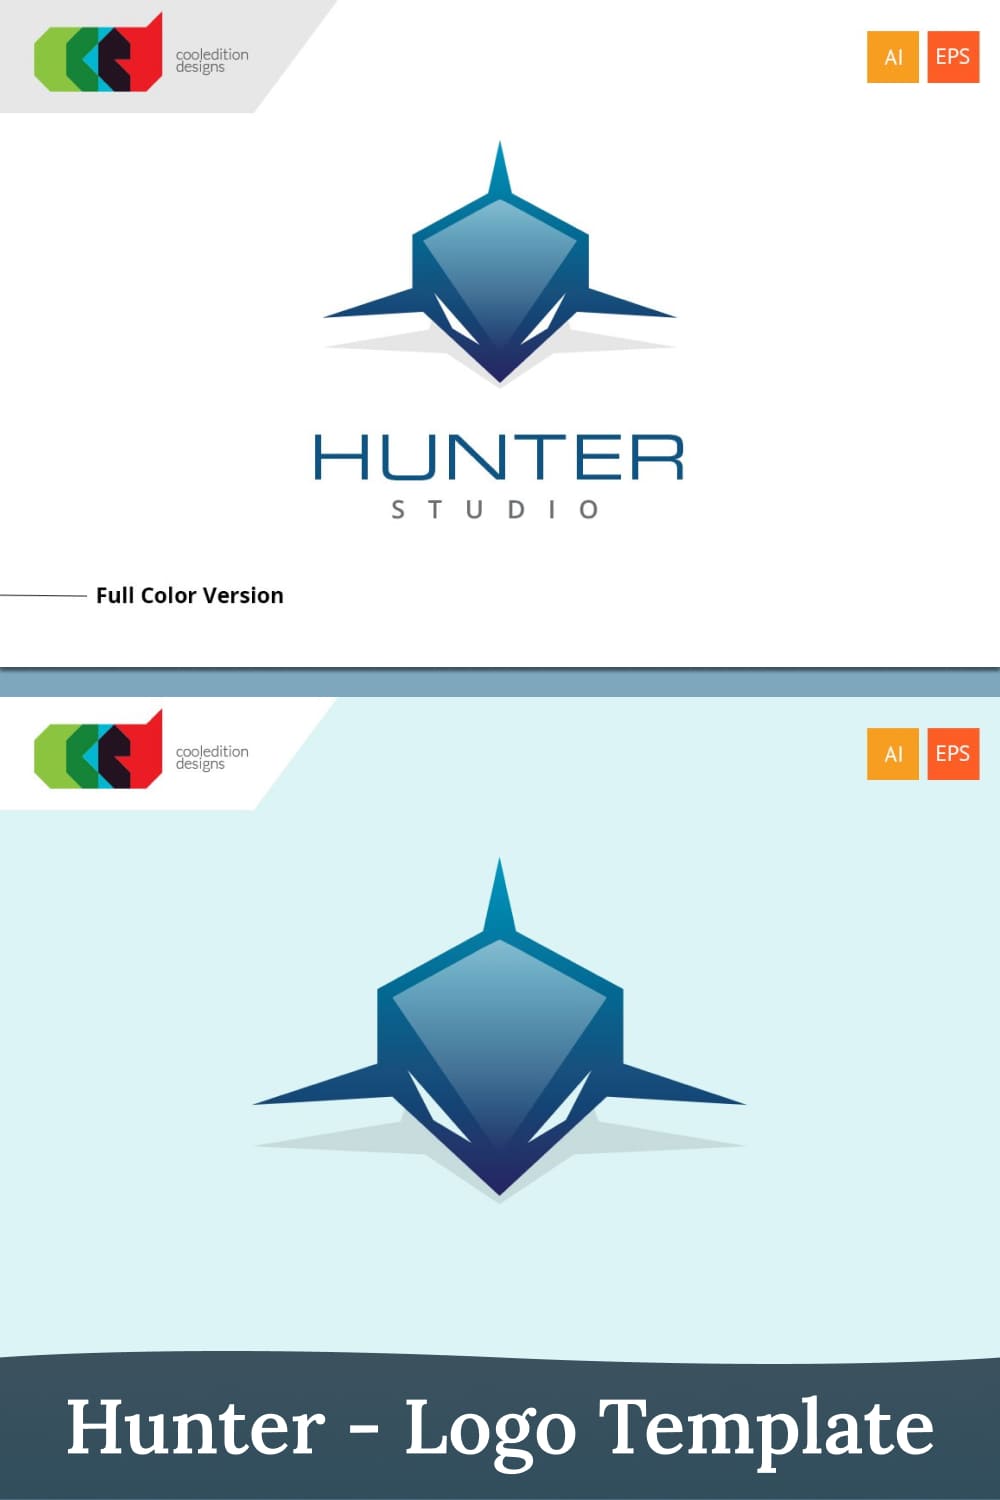 Hunter logo template - pinterest image preview.